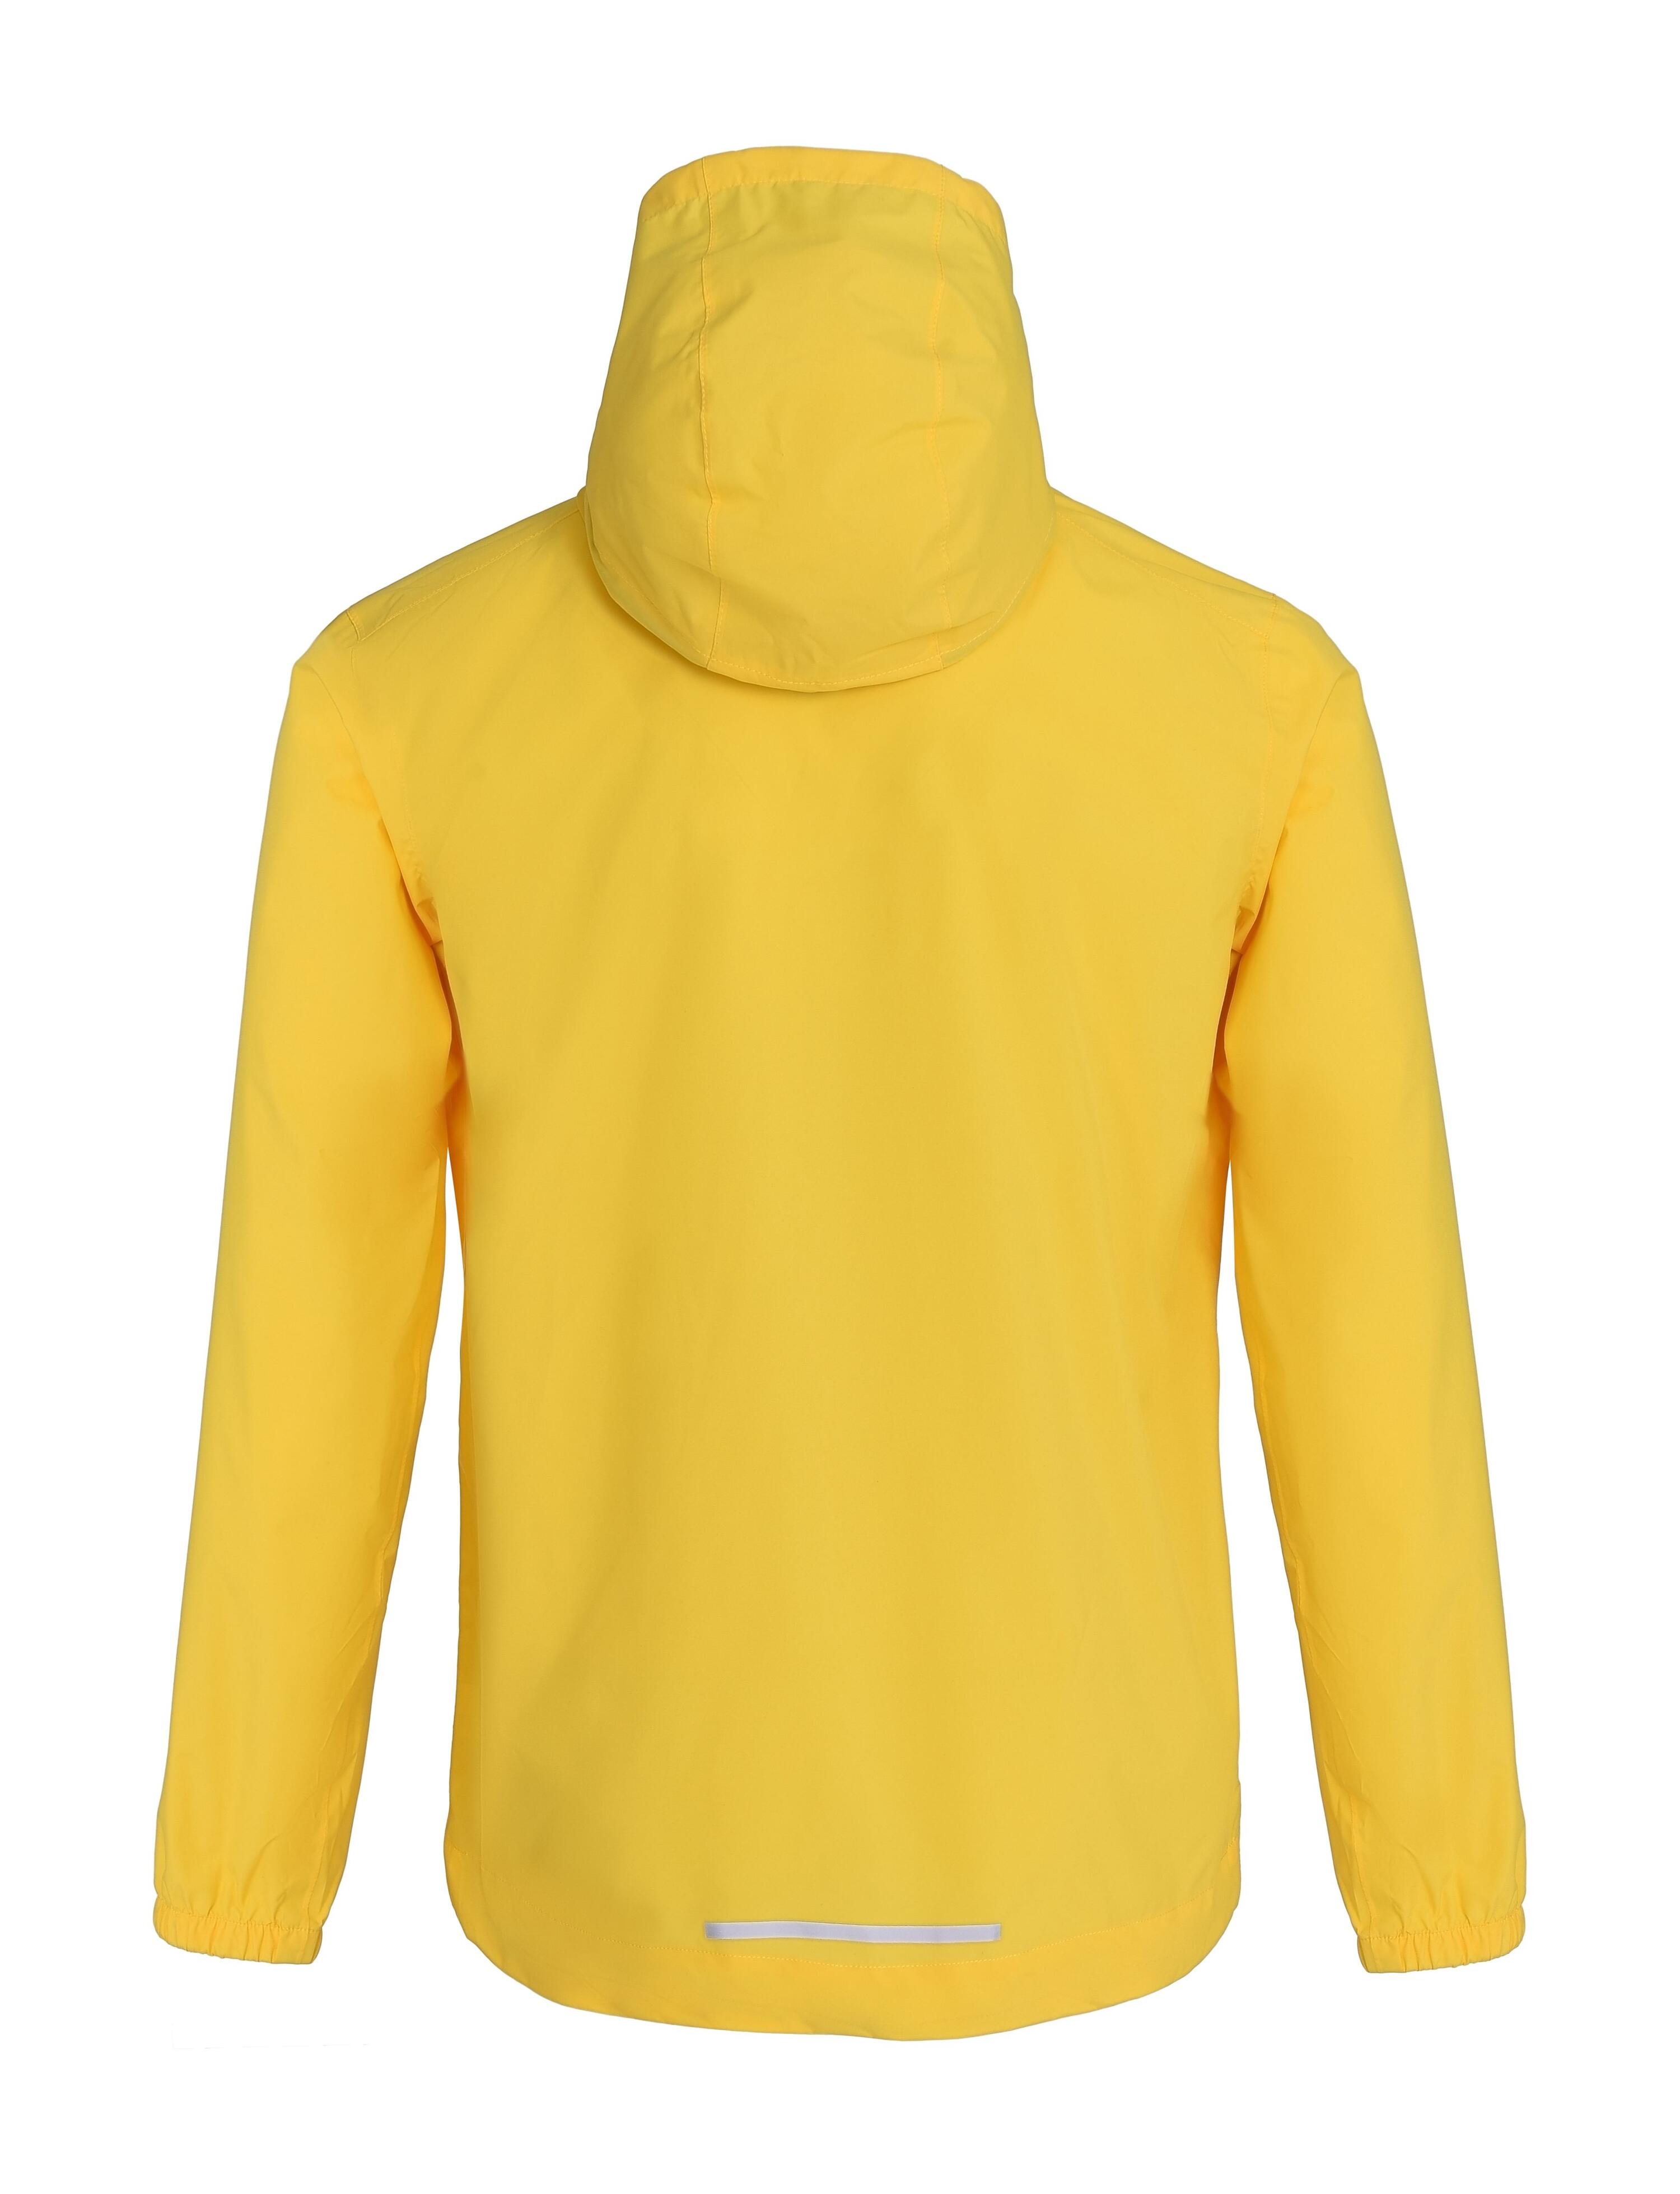 Boys' AirLite Rain Jacket with Zip Pockets - Vibrant Yellow 3/5